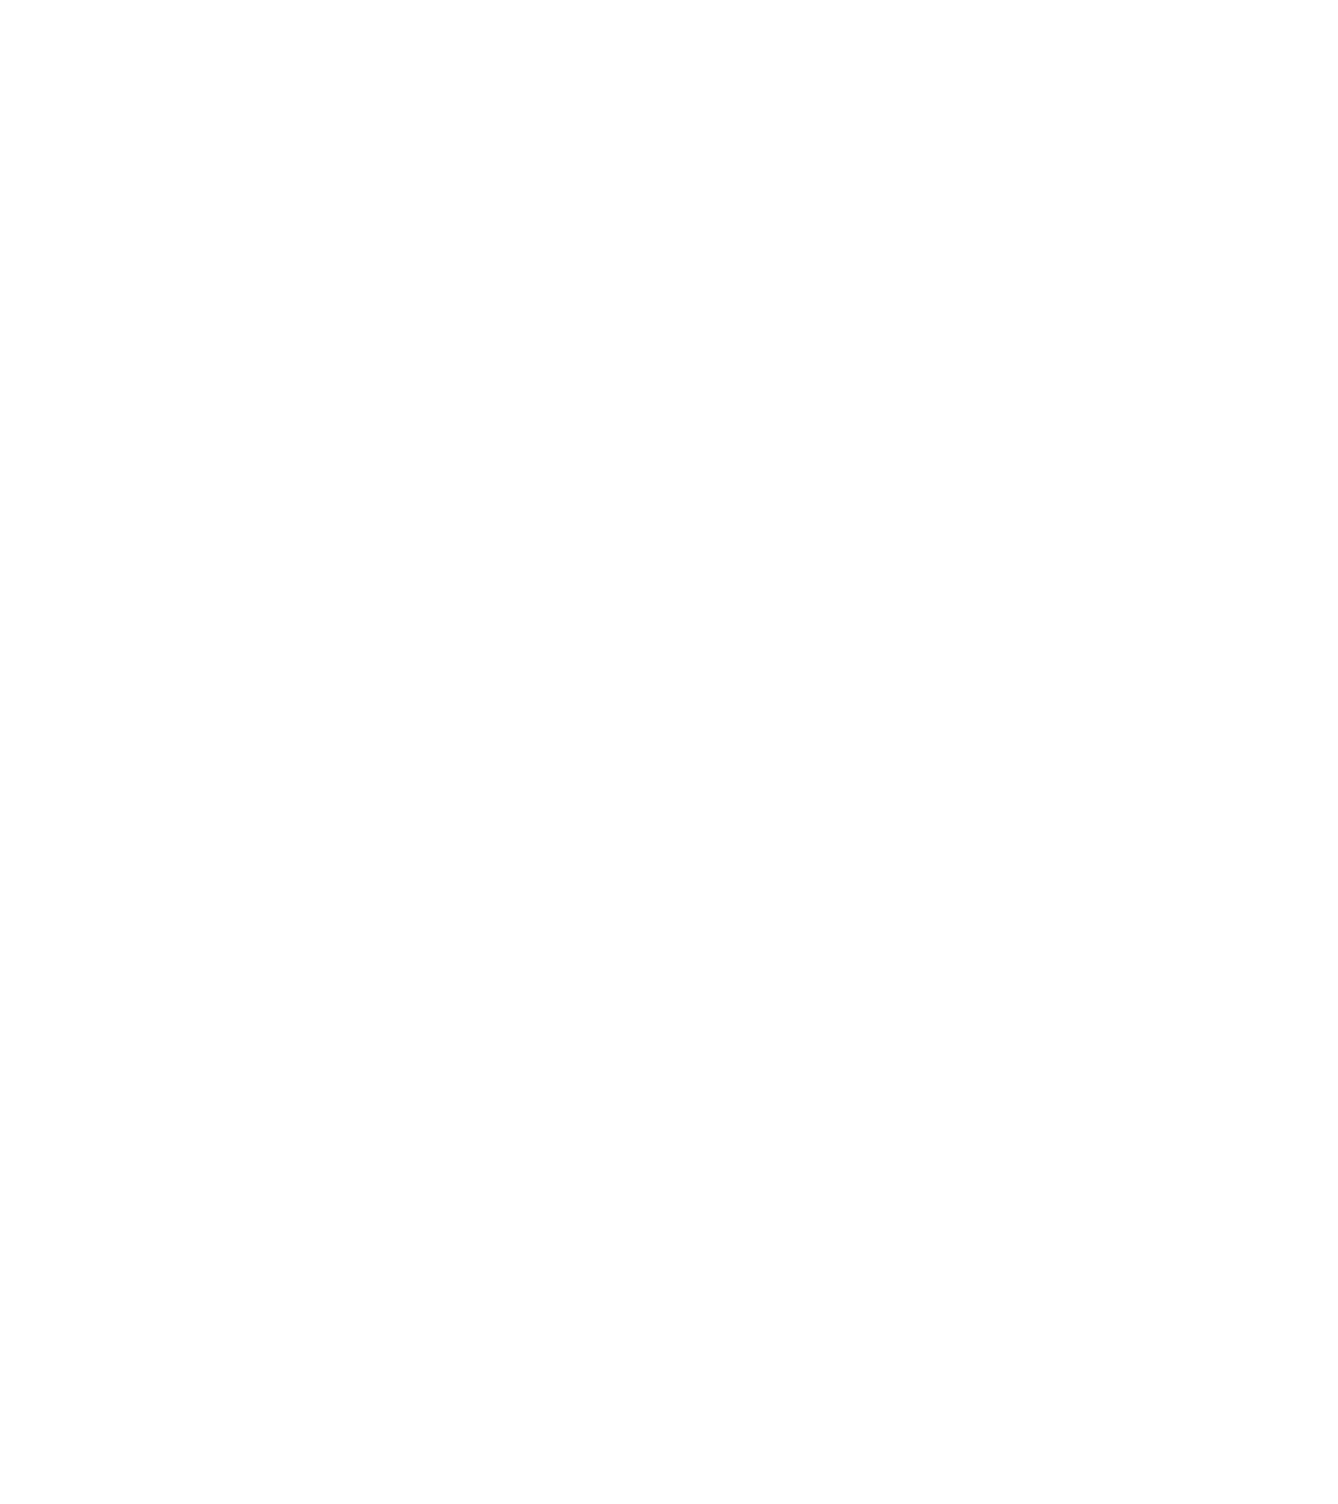 Mobilicom logo for dark backgrounds (transparent PNG)